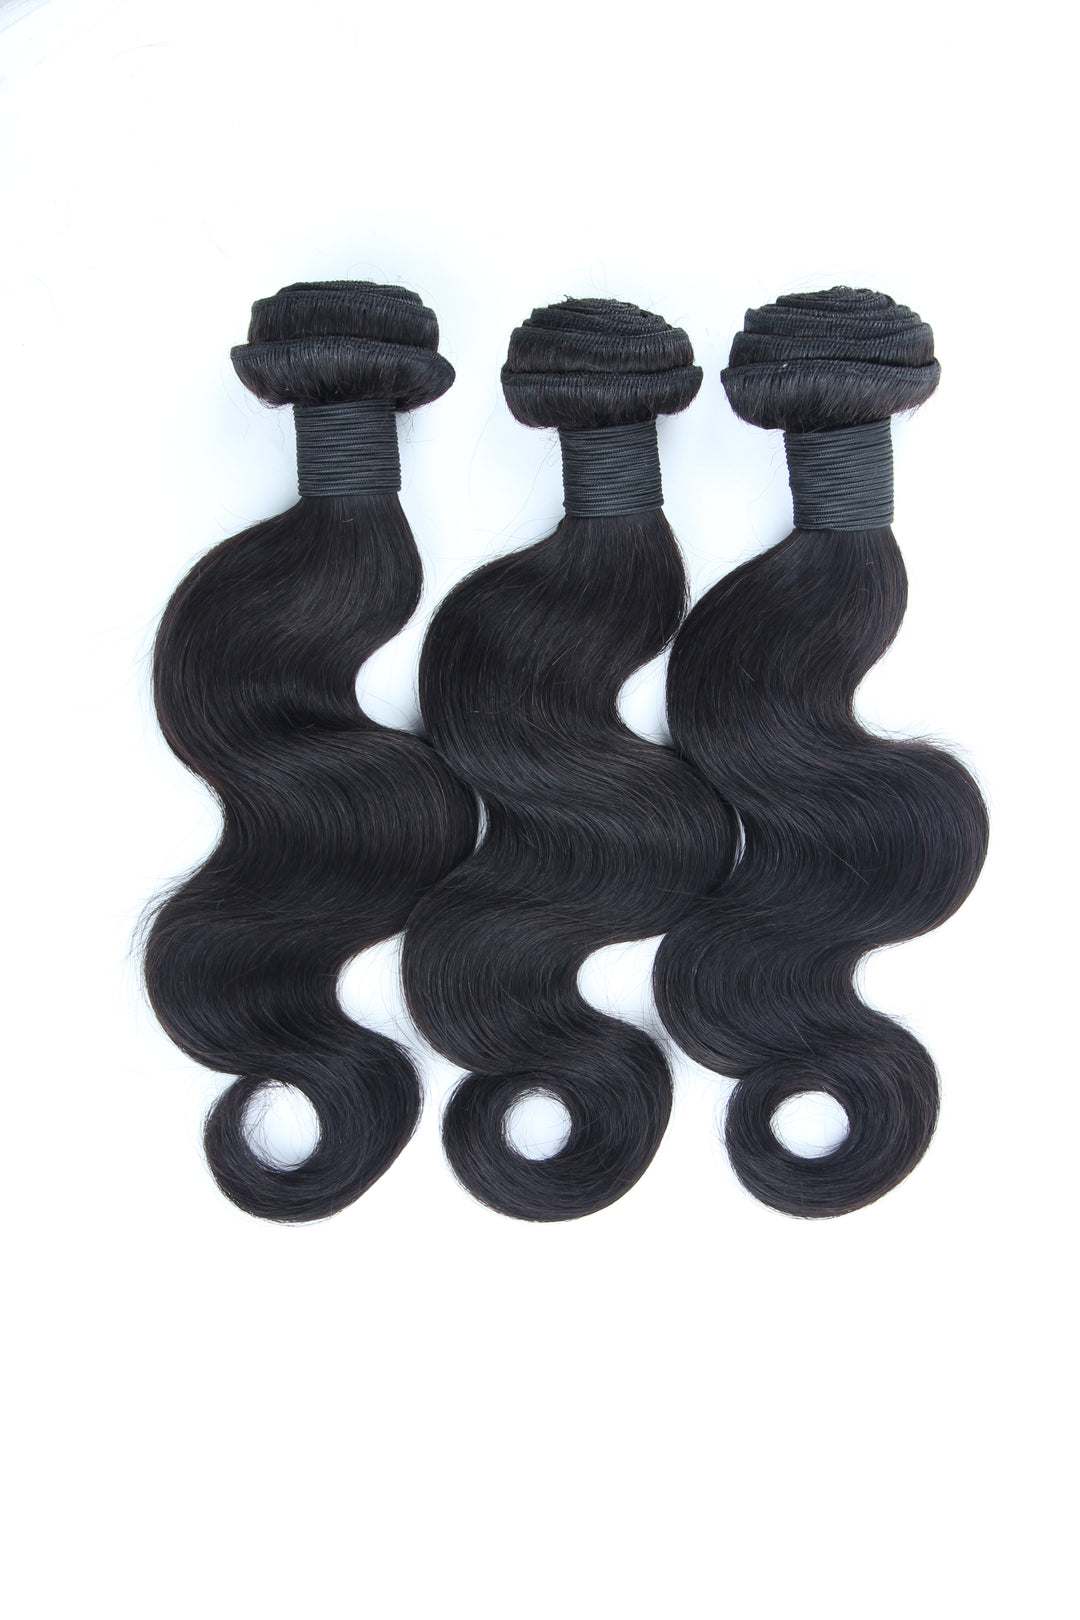 【10A GRADE】 Wholesale virgin hair 10 Bundles Indian Hair Straight/body wave top quality